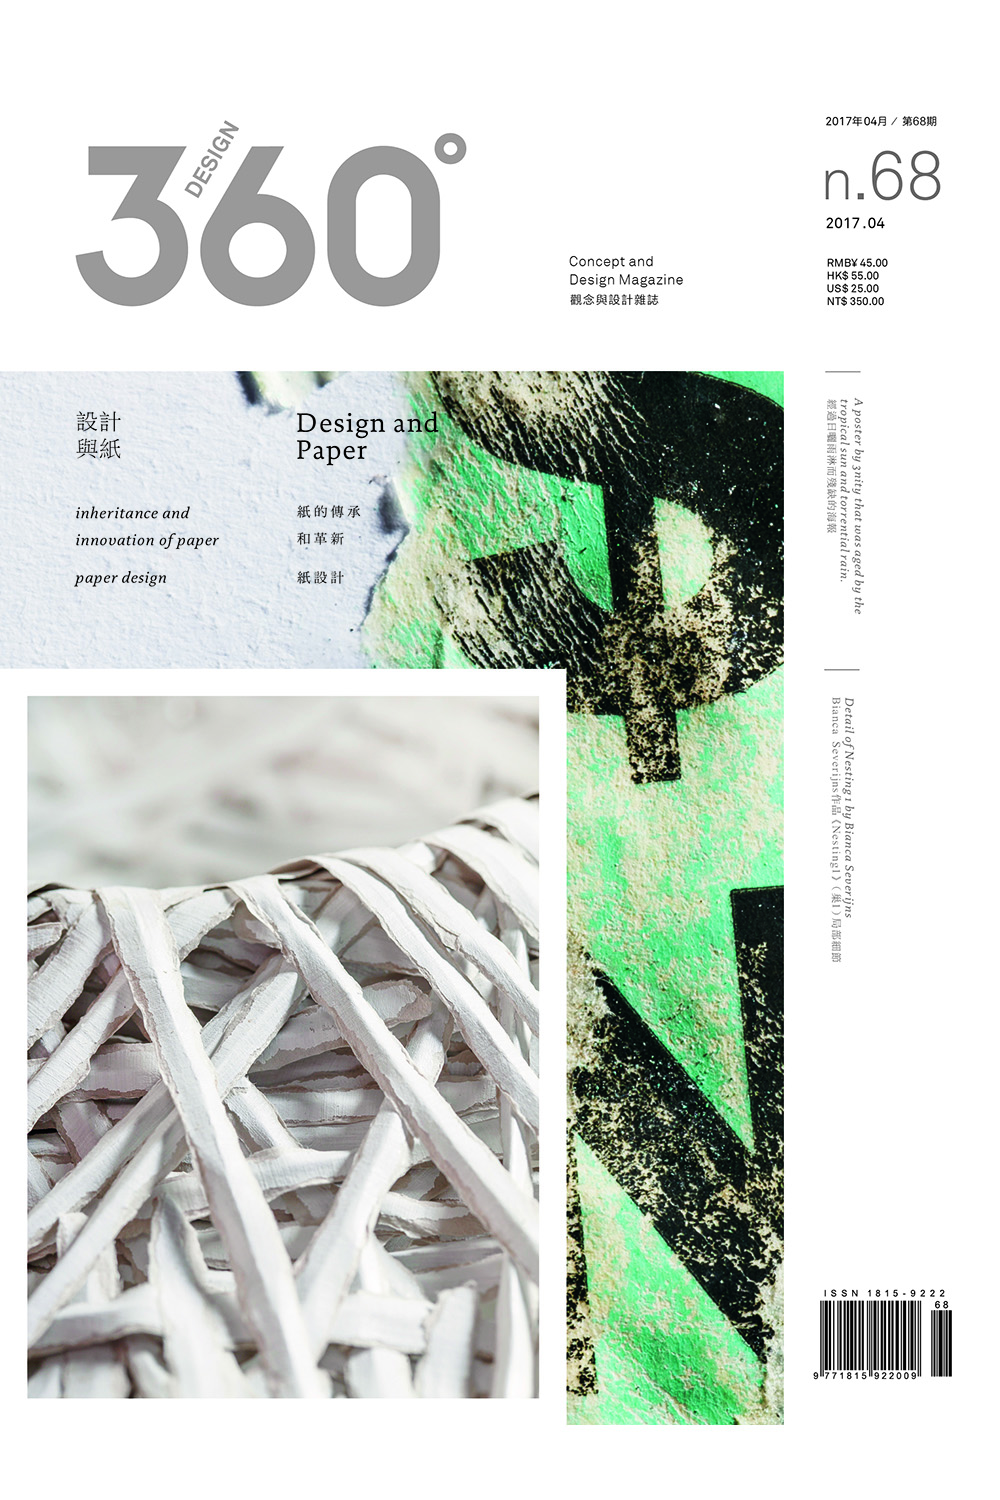 Design 360, Baoism, Baobao, May 2017